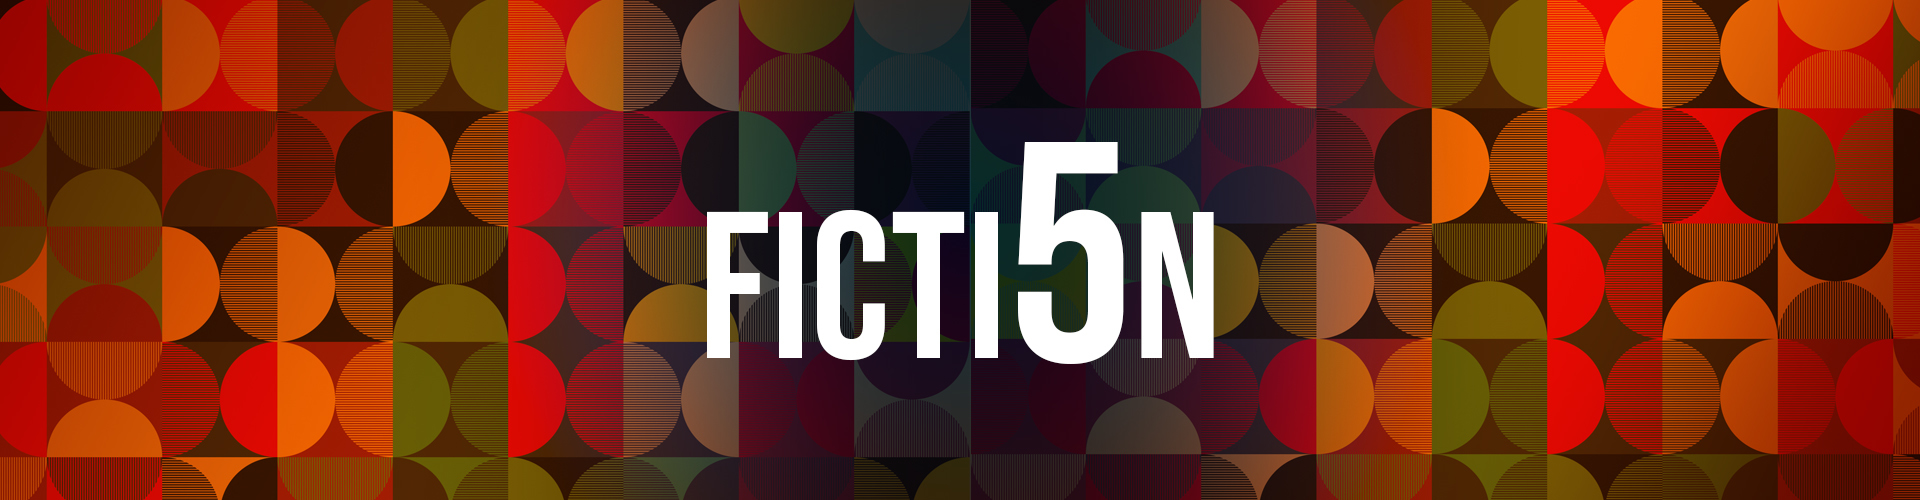 fiction 5